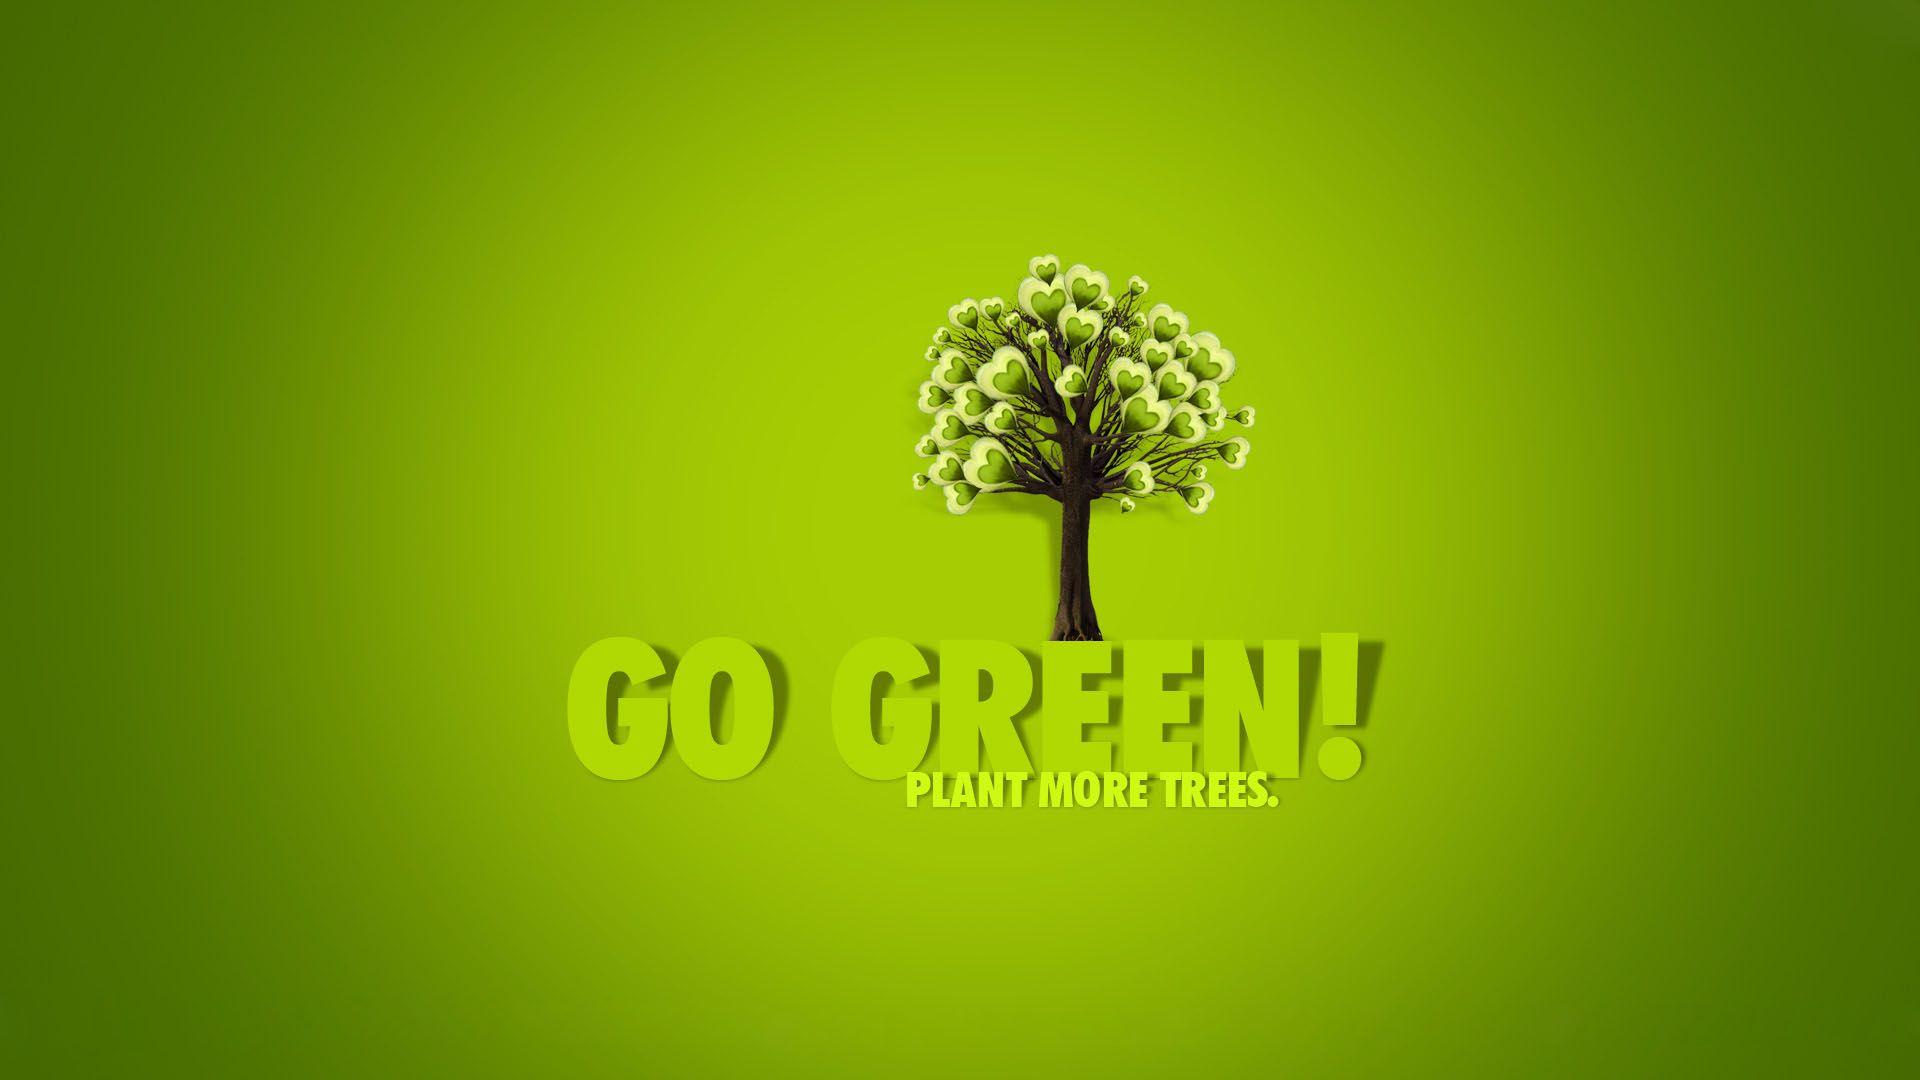 Go Green Save Tree Hd Desktop Wallpaper. CHENNAI FOOD SCENE